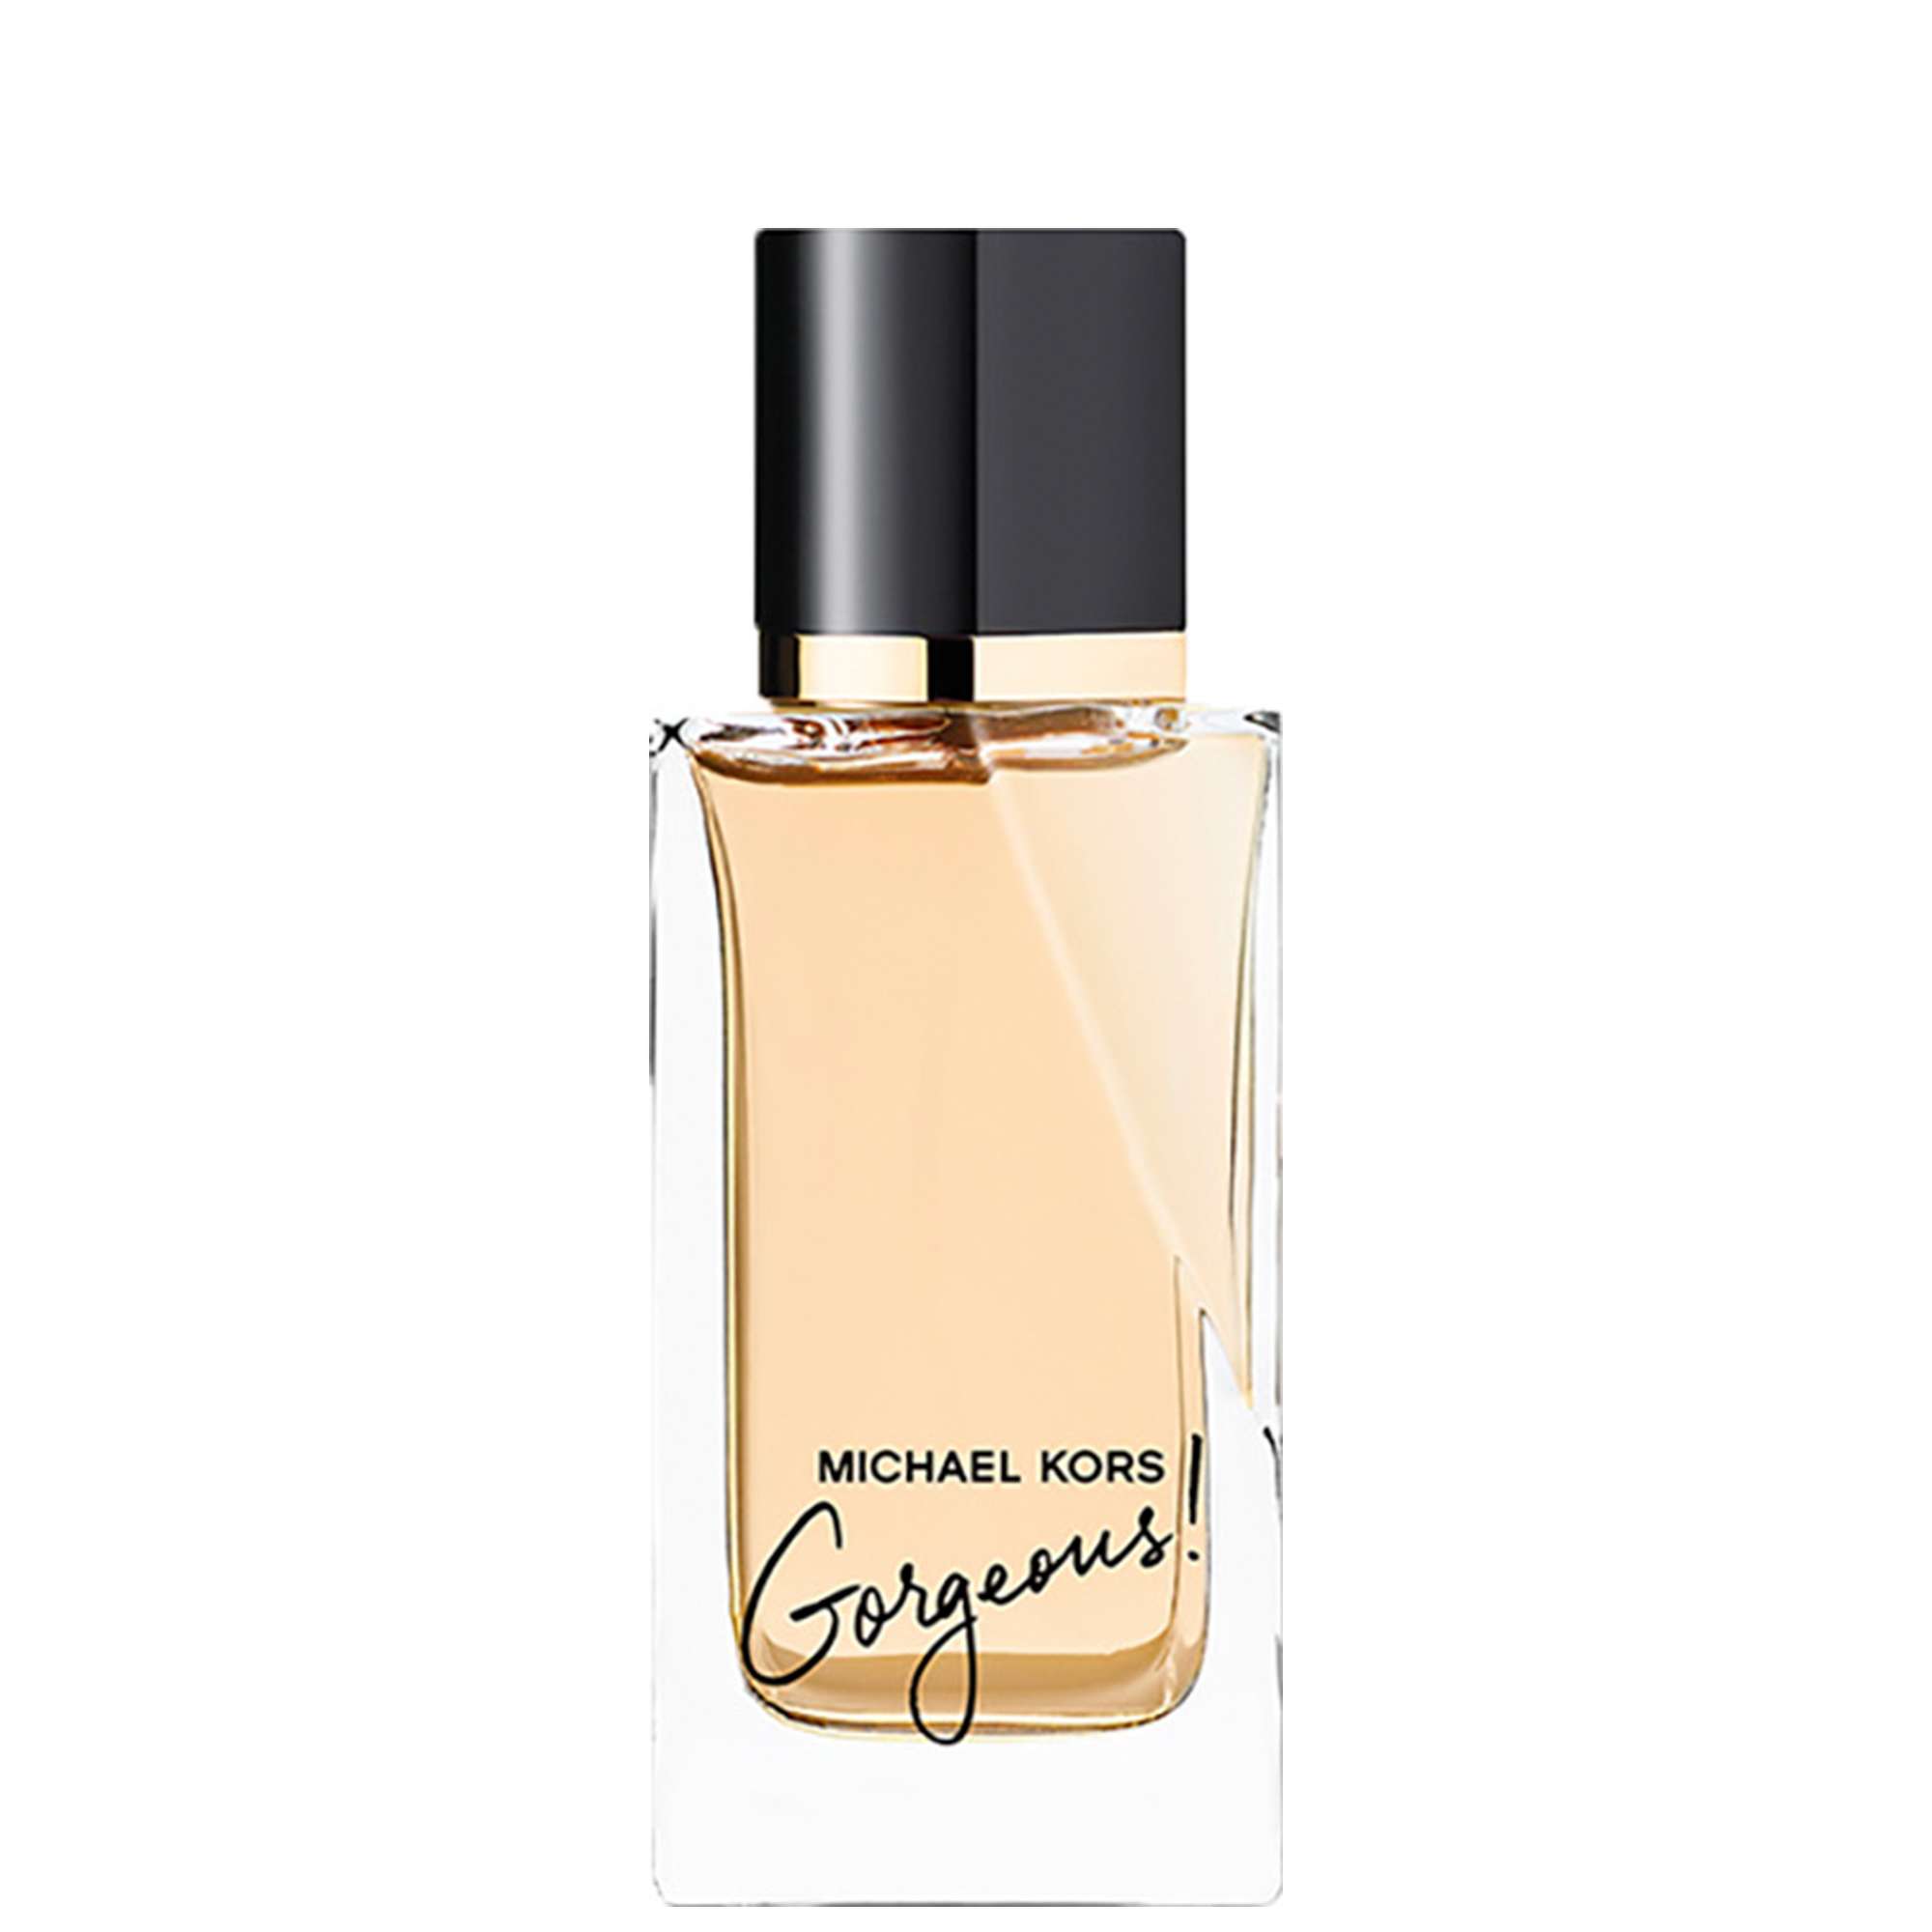 Photos - Women's Fragrance Michael Kors Gorgeous! Eau de Parfum Spray 50ml 